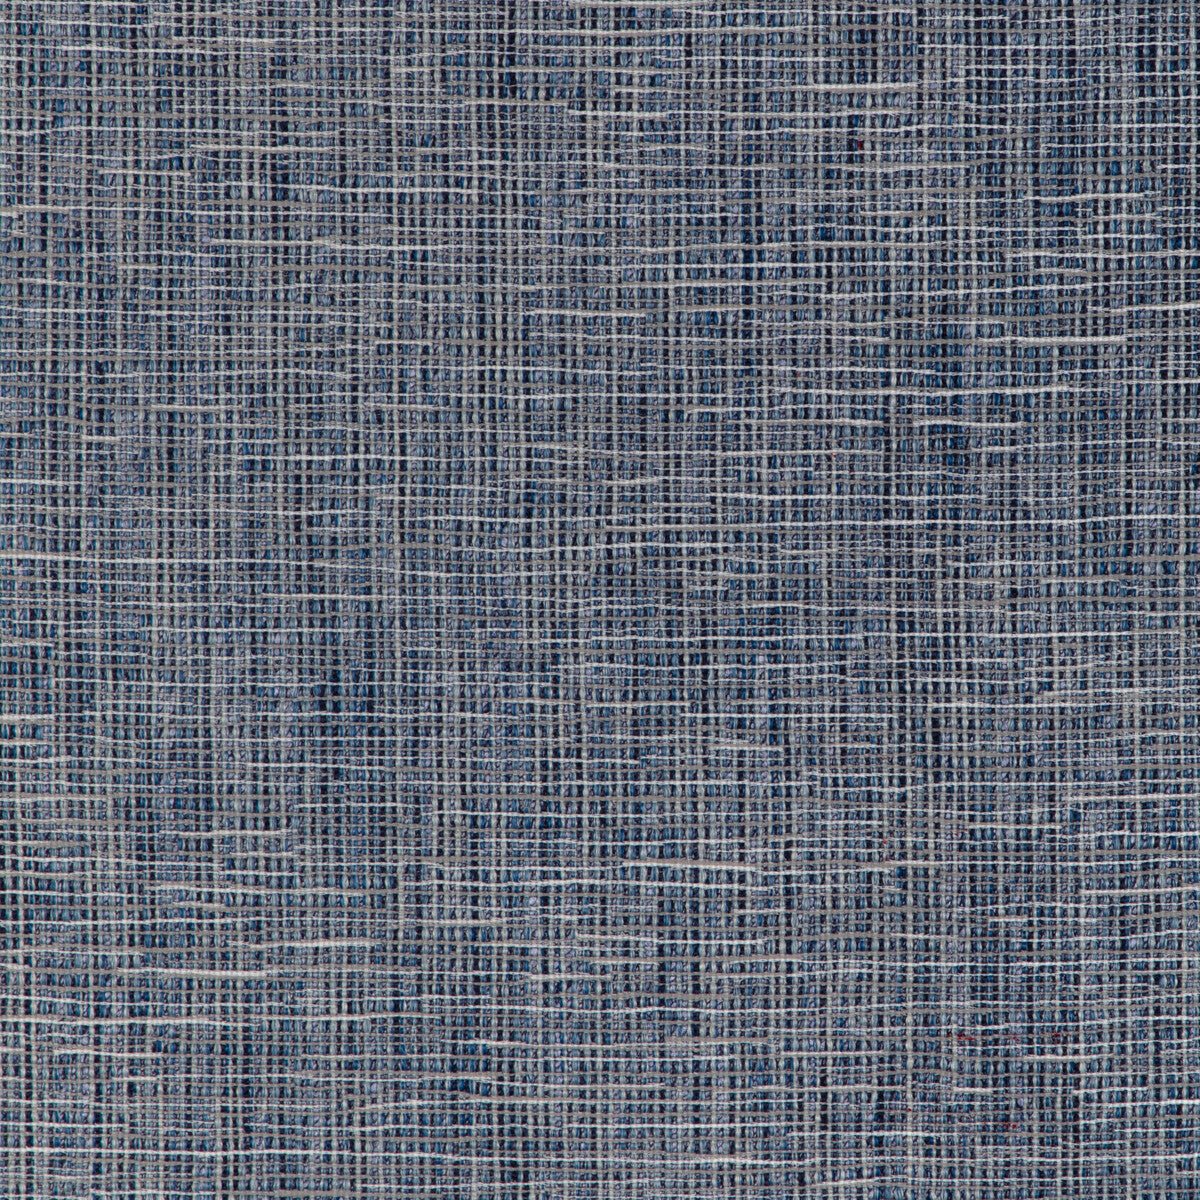 Kravet Smart fabric in 36668-516 color - pattern 36668.516.0 - by Kravet Smart in the Performance Kravetarmor collection